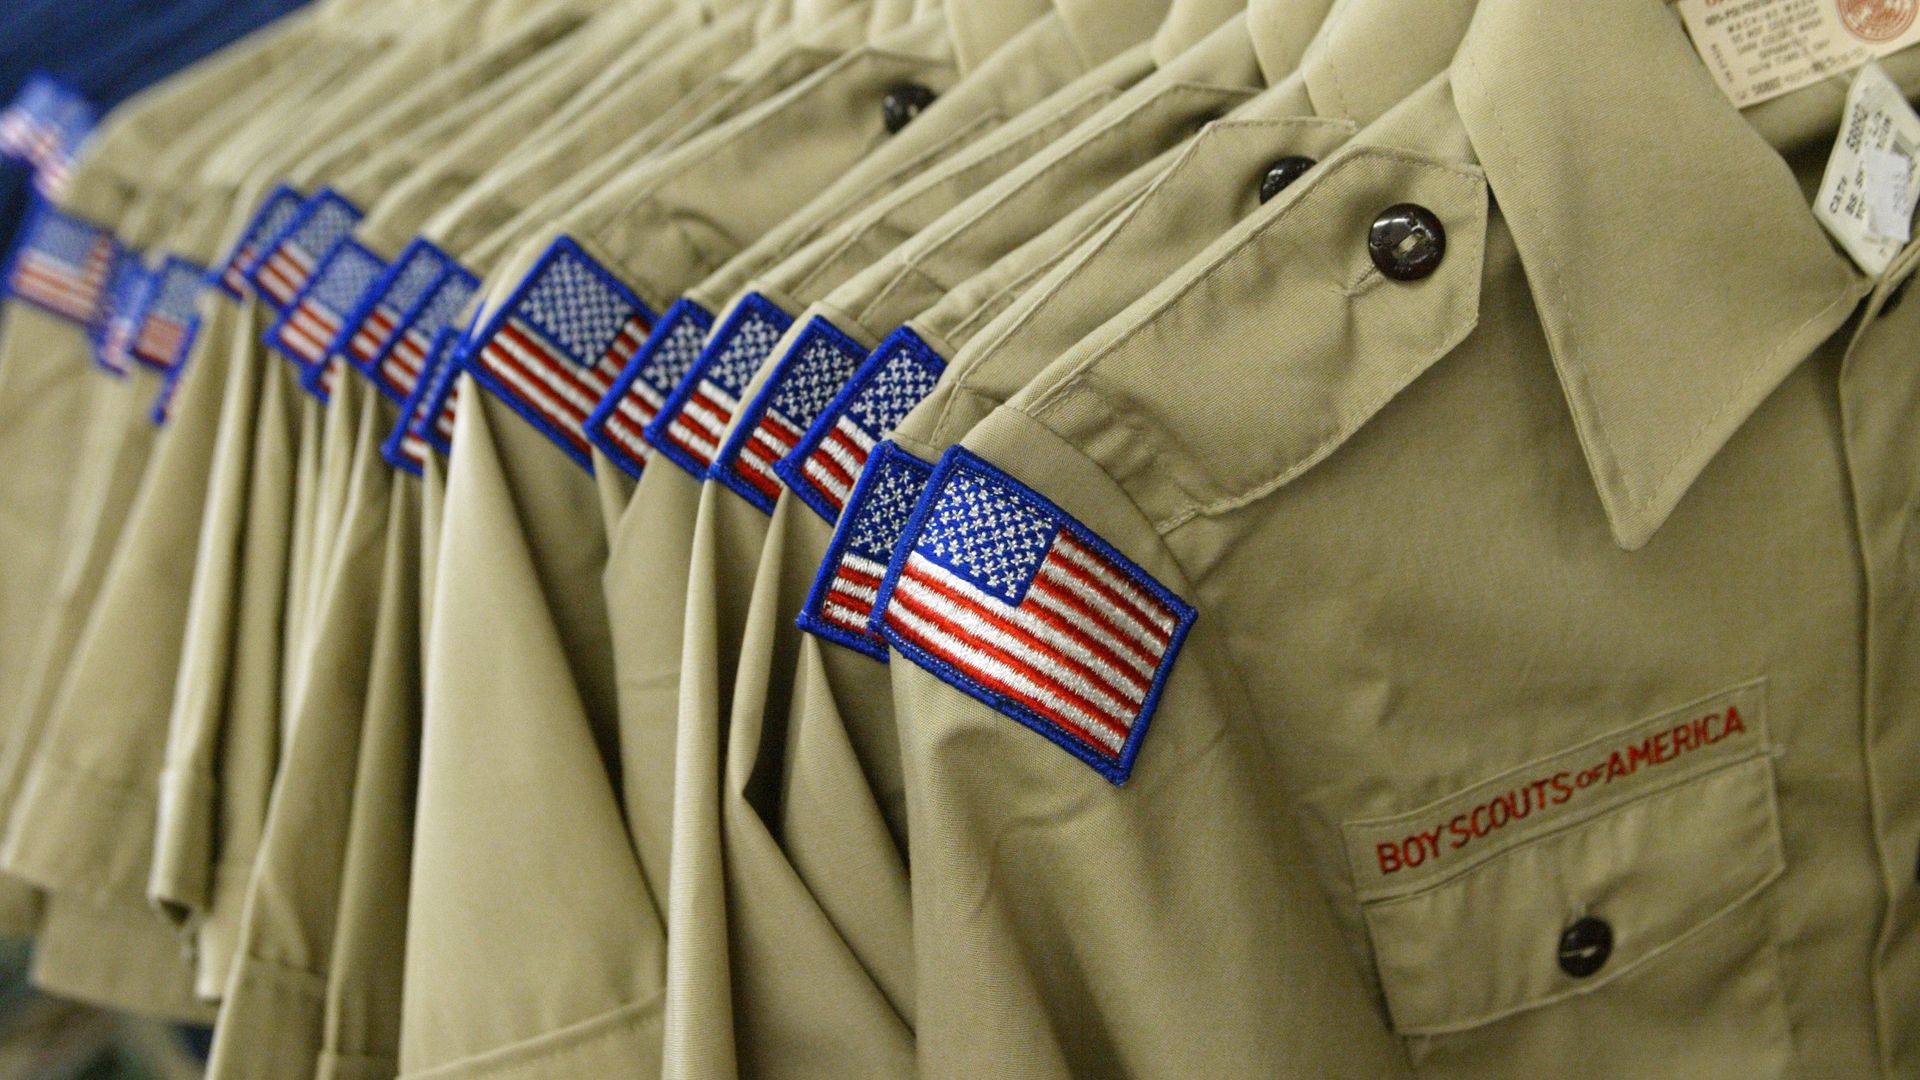  Boy Scouts Uniform